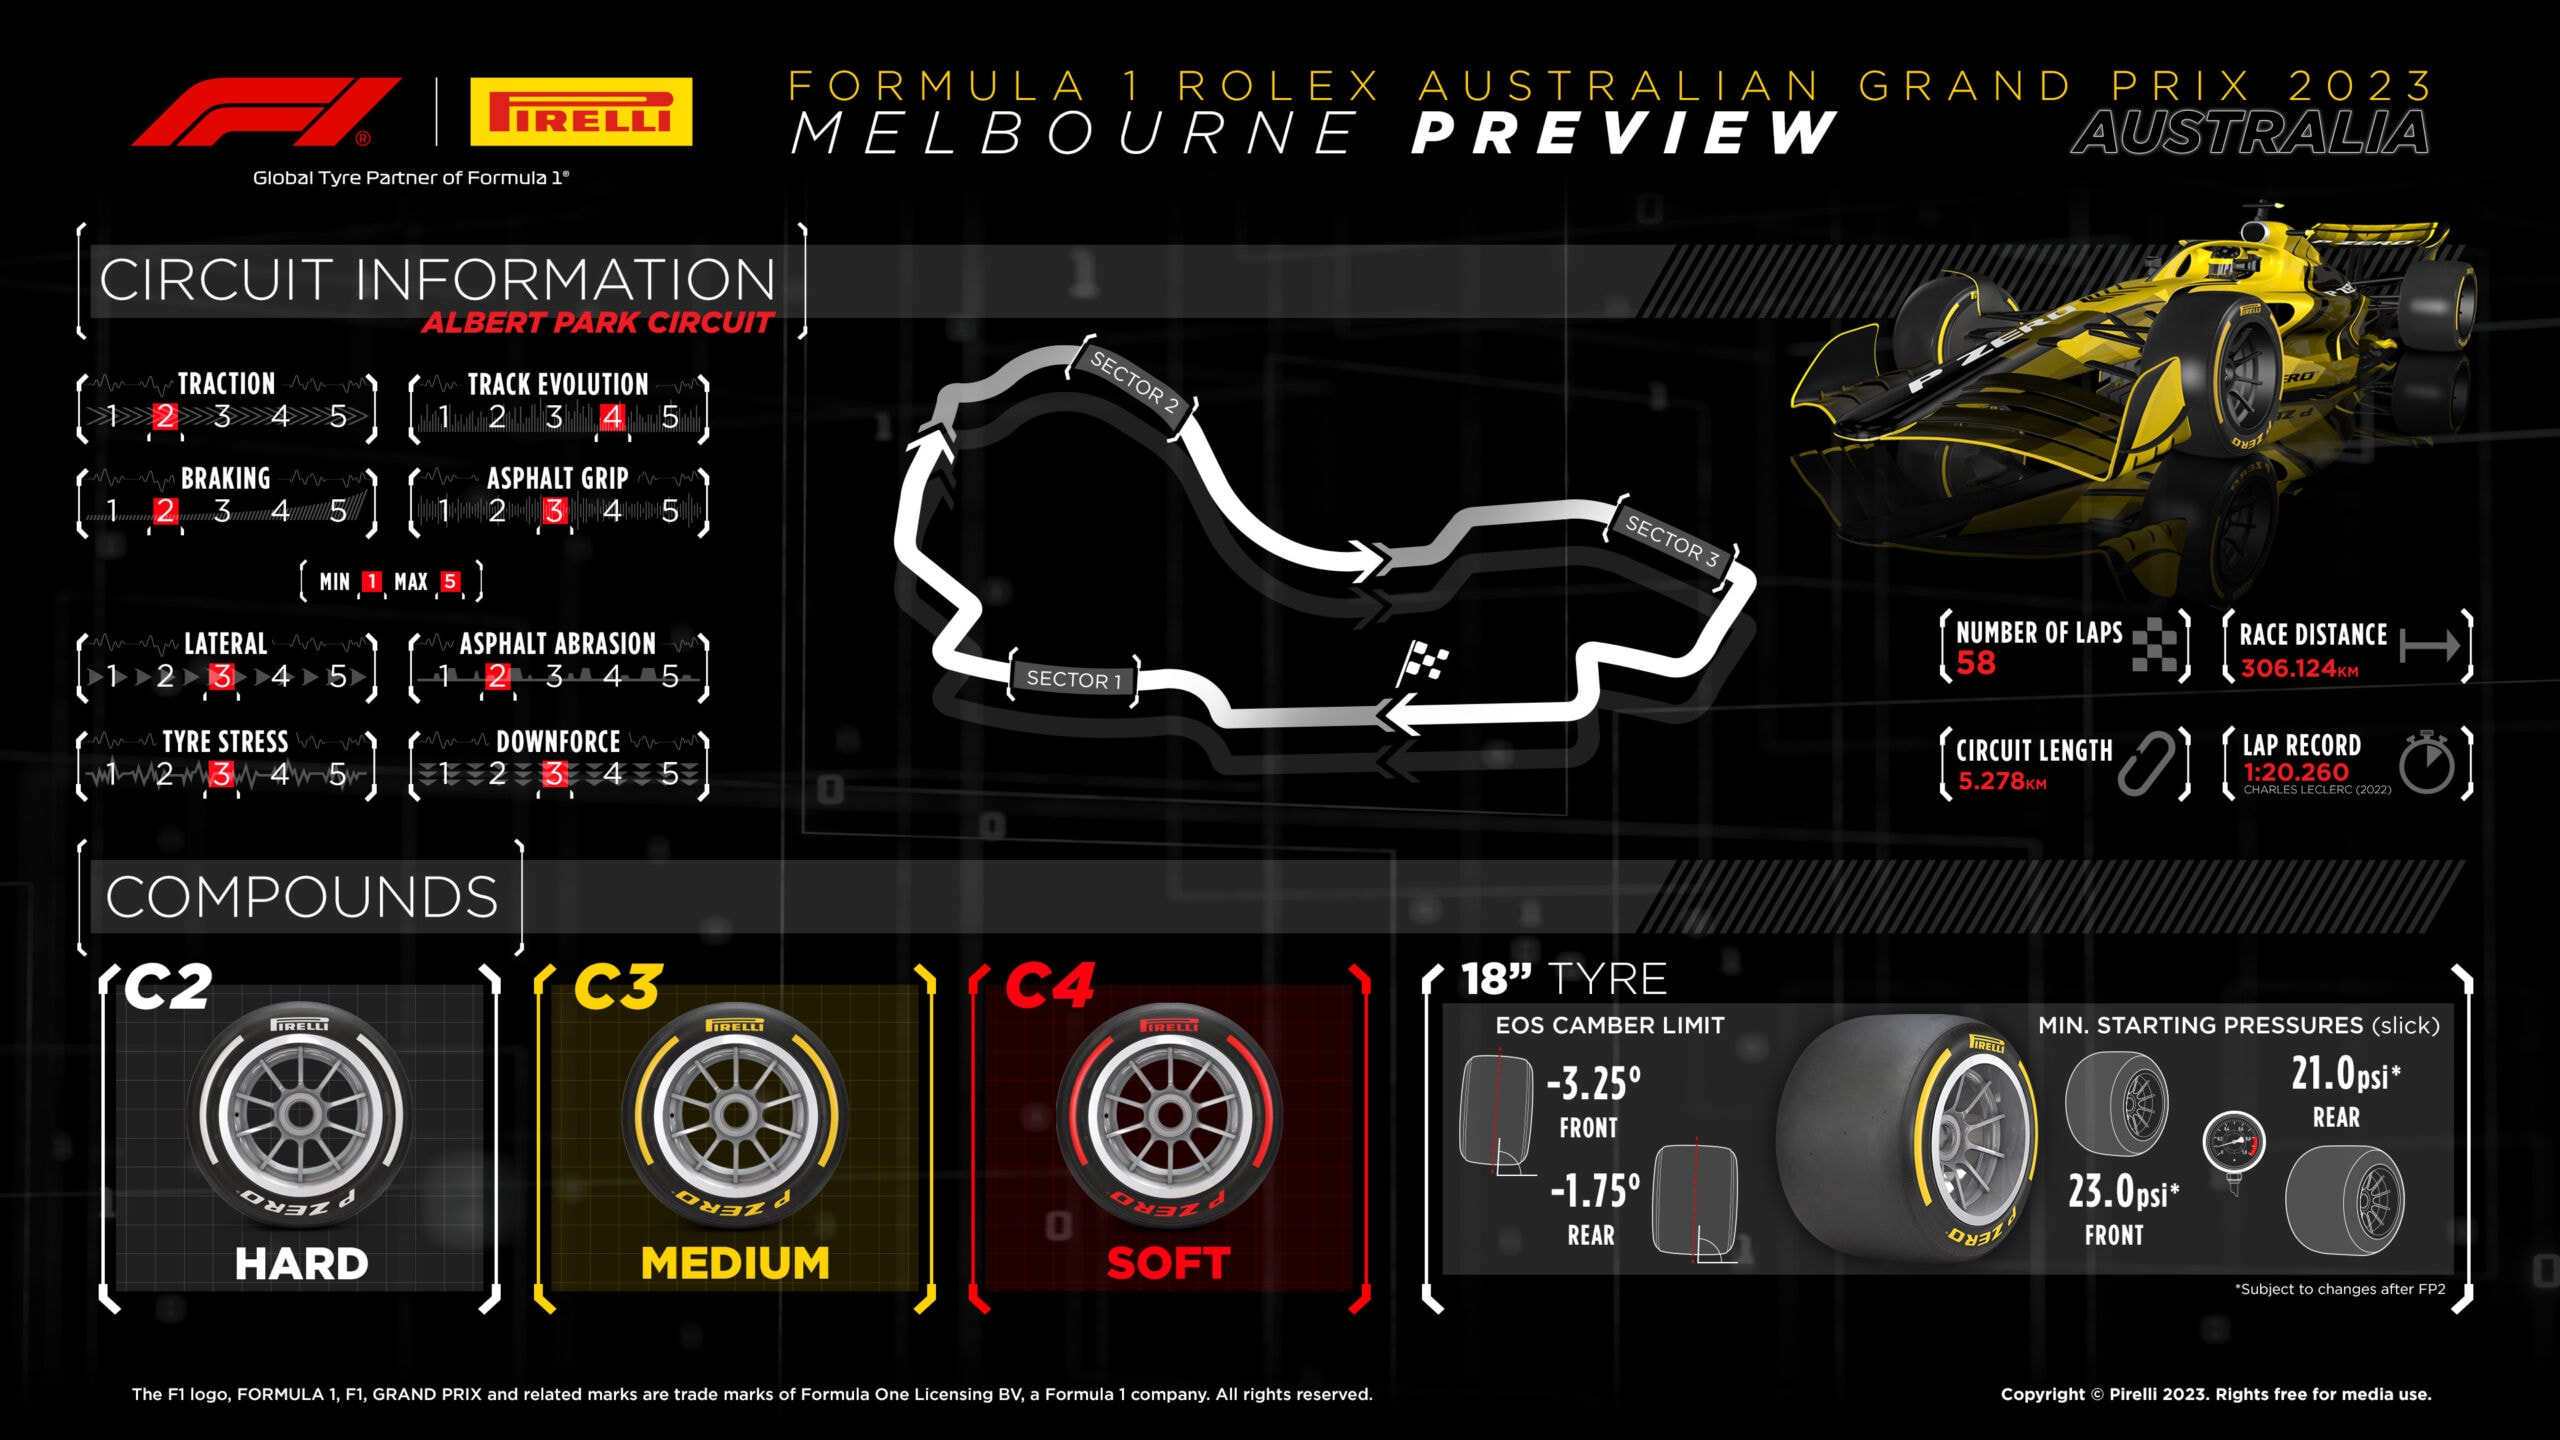 2023 Australian Grand Prix Tyre Compounds